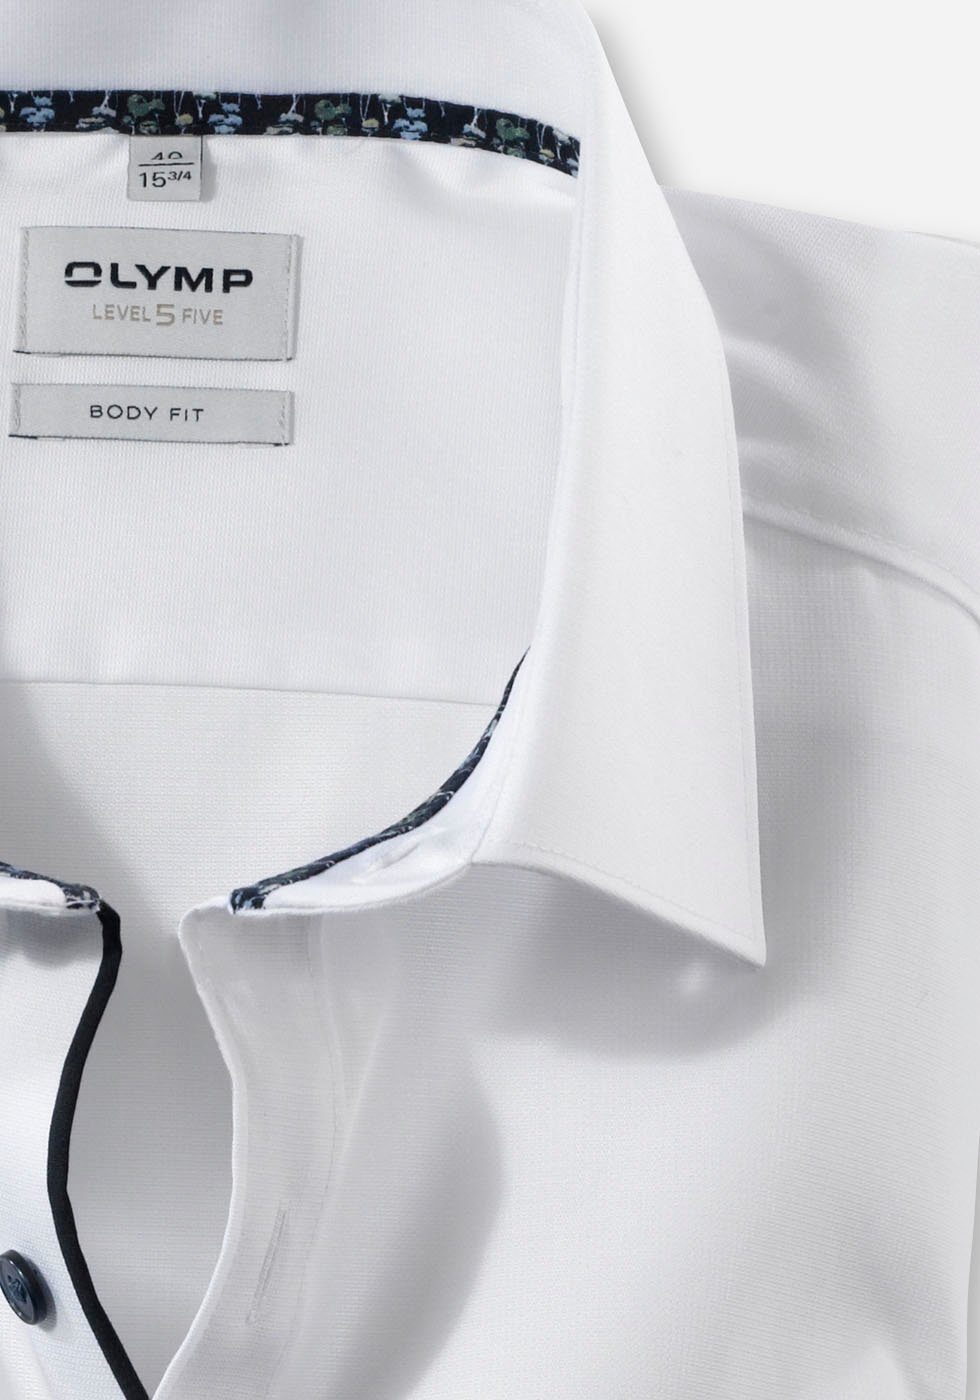 Five weiss Logo-Stitching Businesshemd body tonigem fit OLYMP Level mit